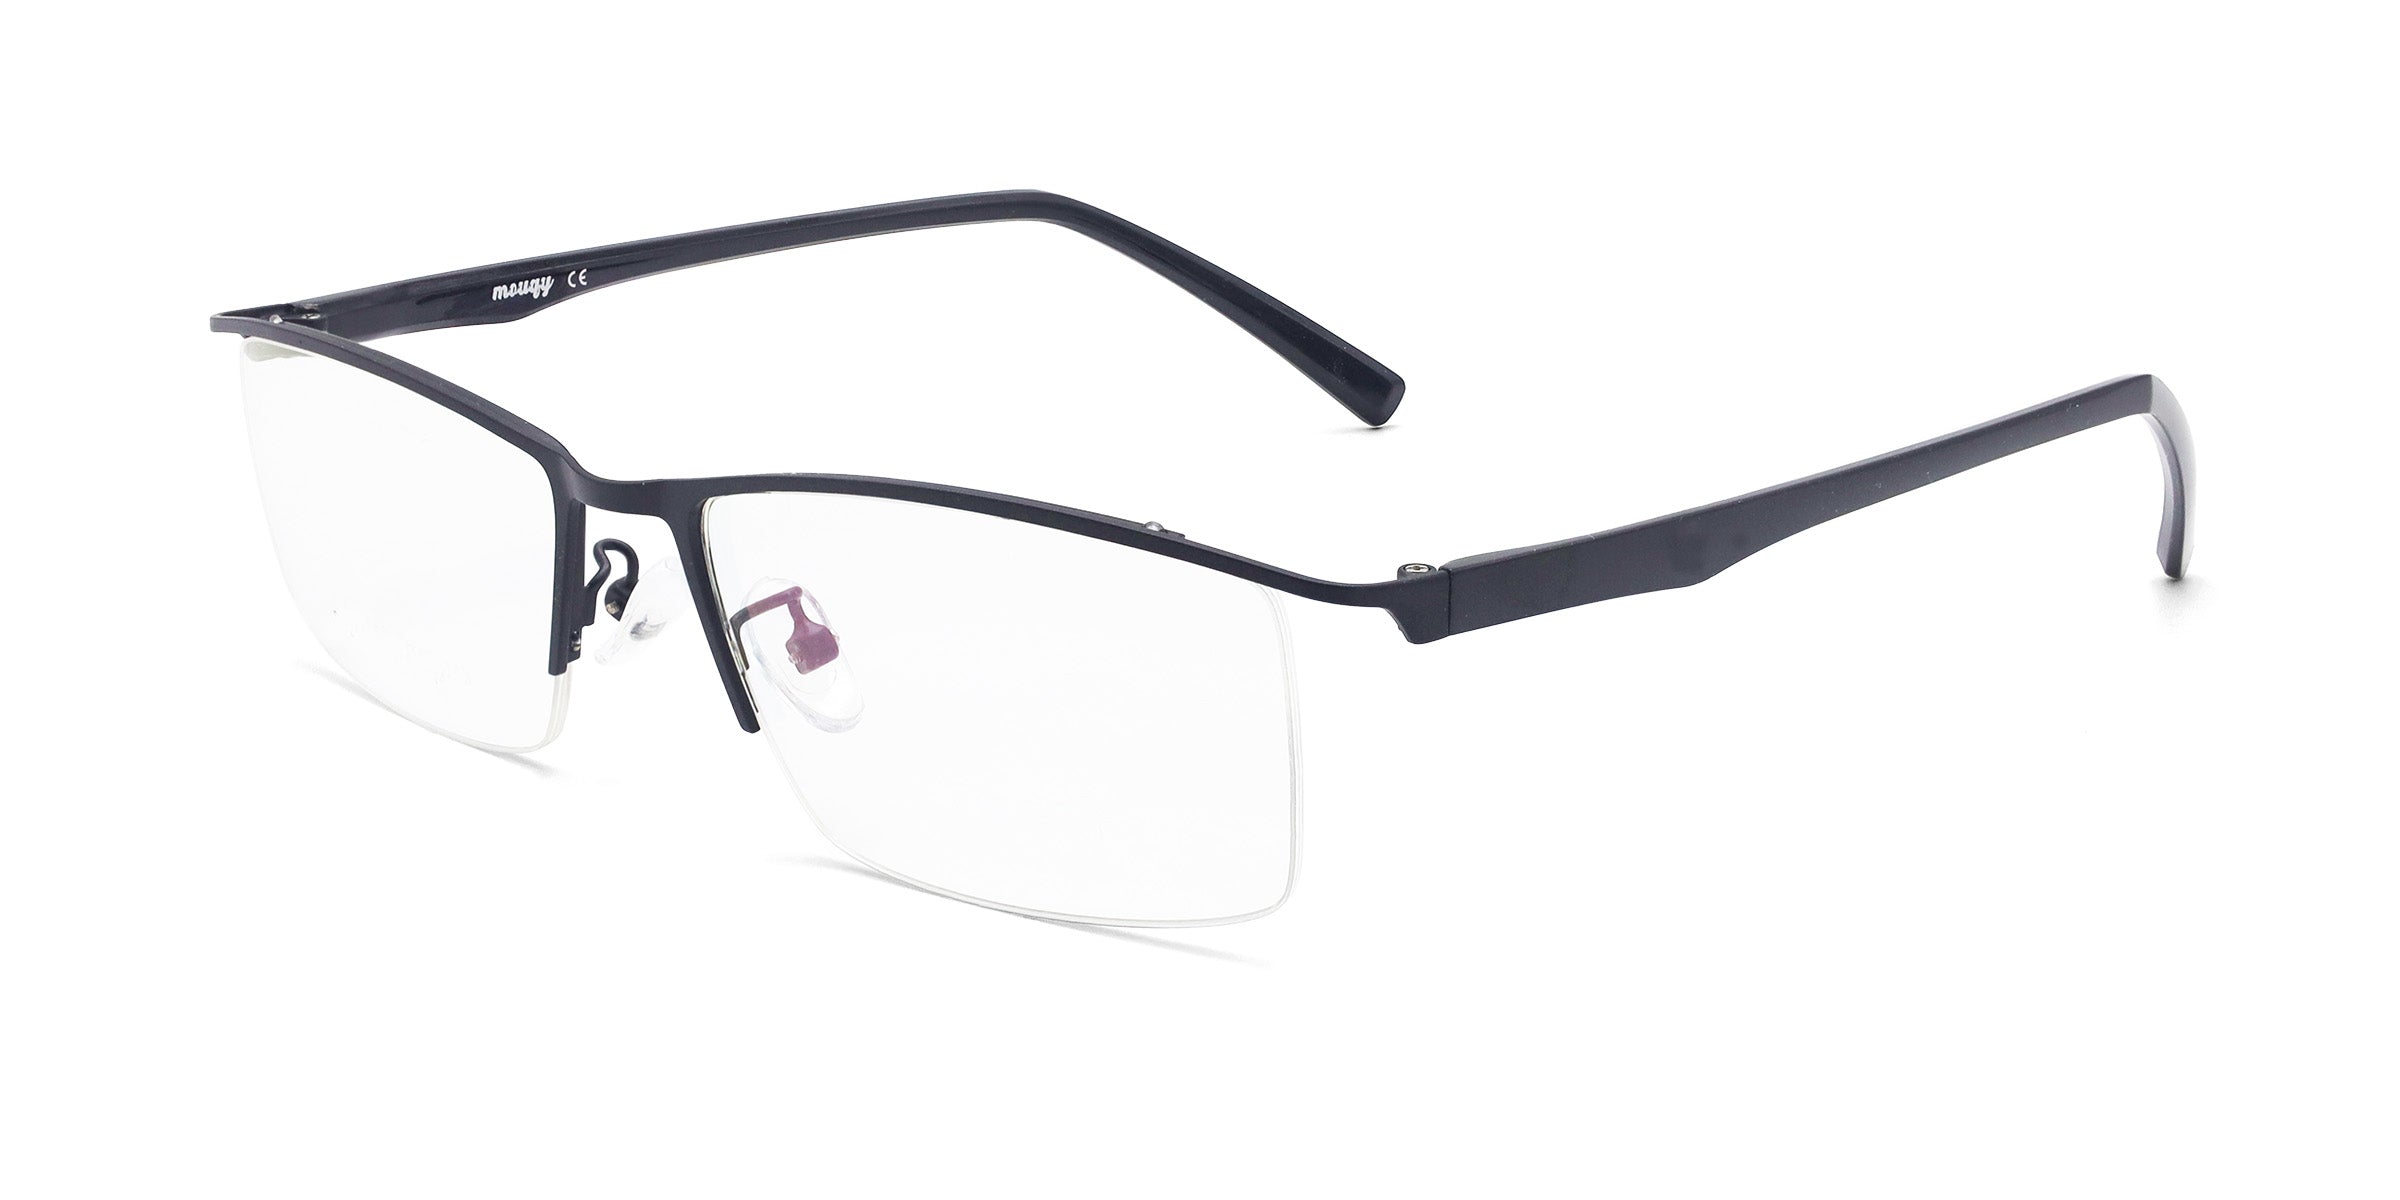 Justice Rectangle Black eyeglasses frames angled view